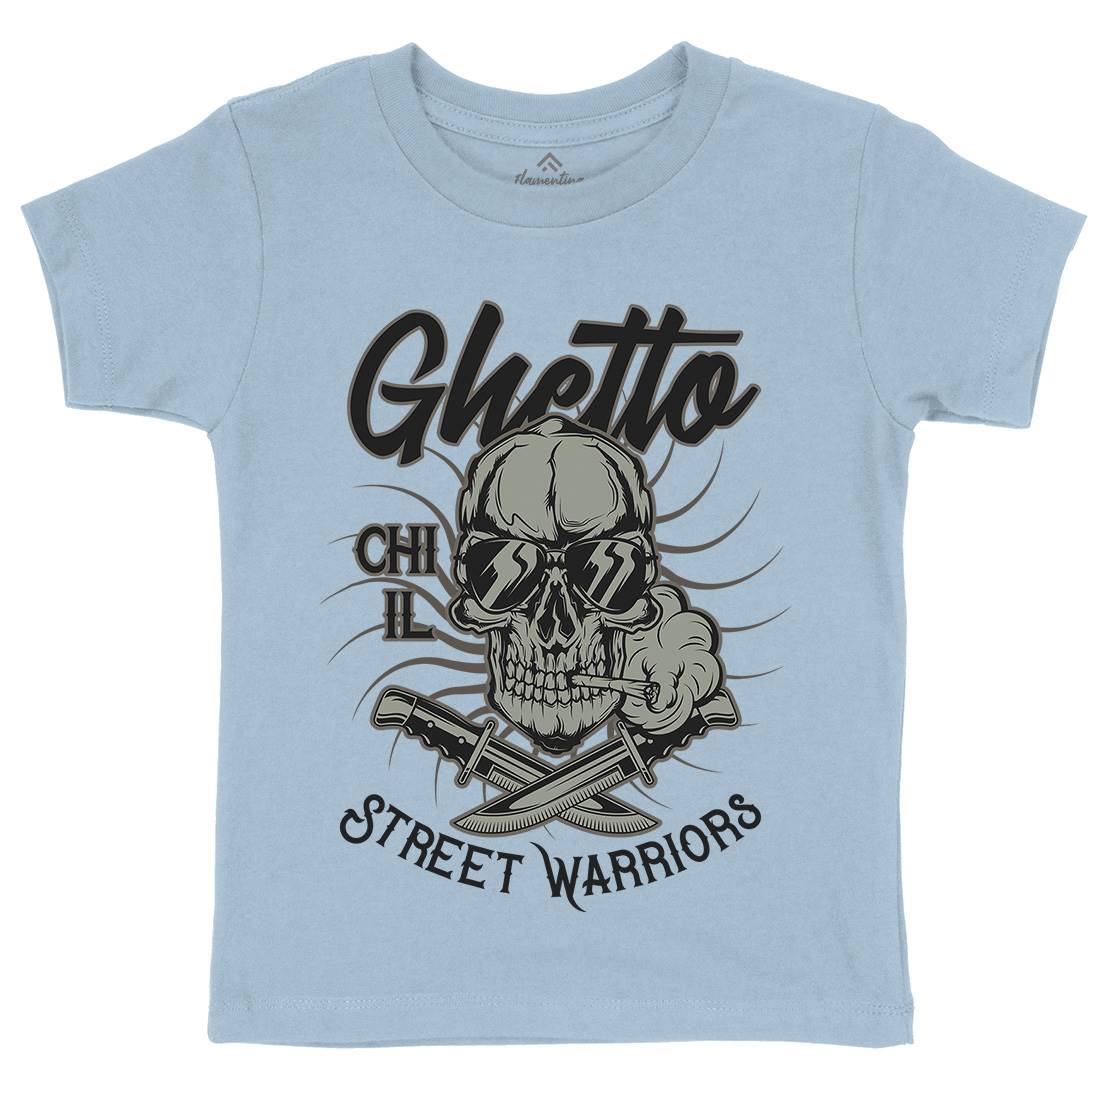 Ghetto Street Warriors Kids Crew Neck T-Shirt Retro D937